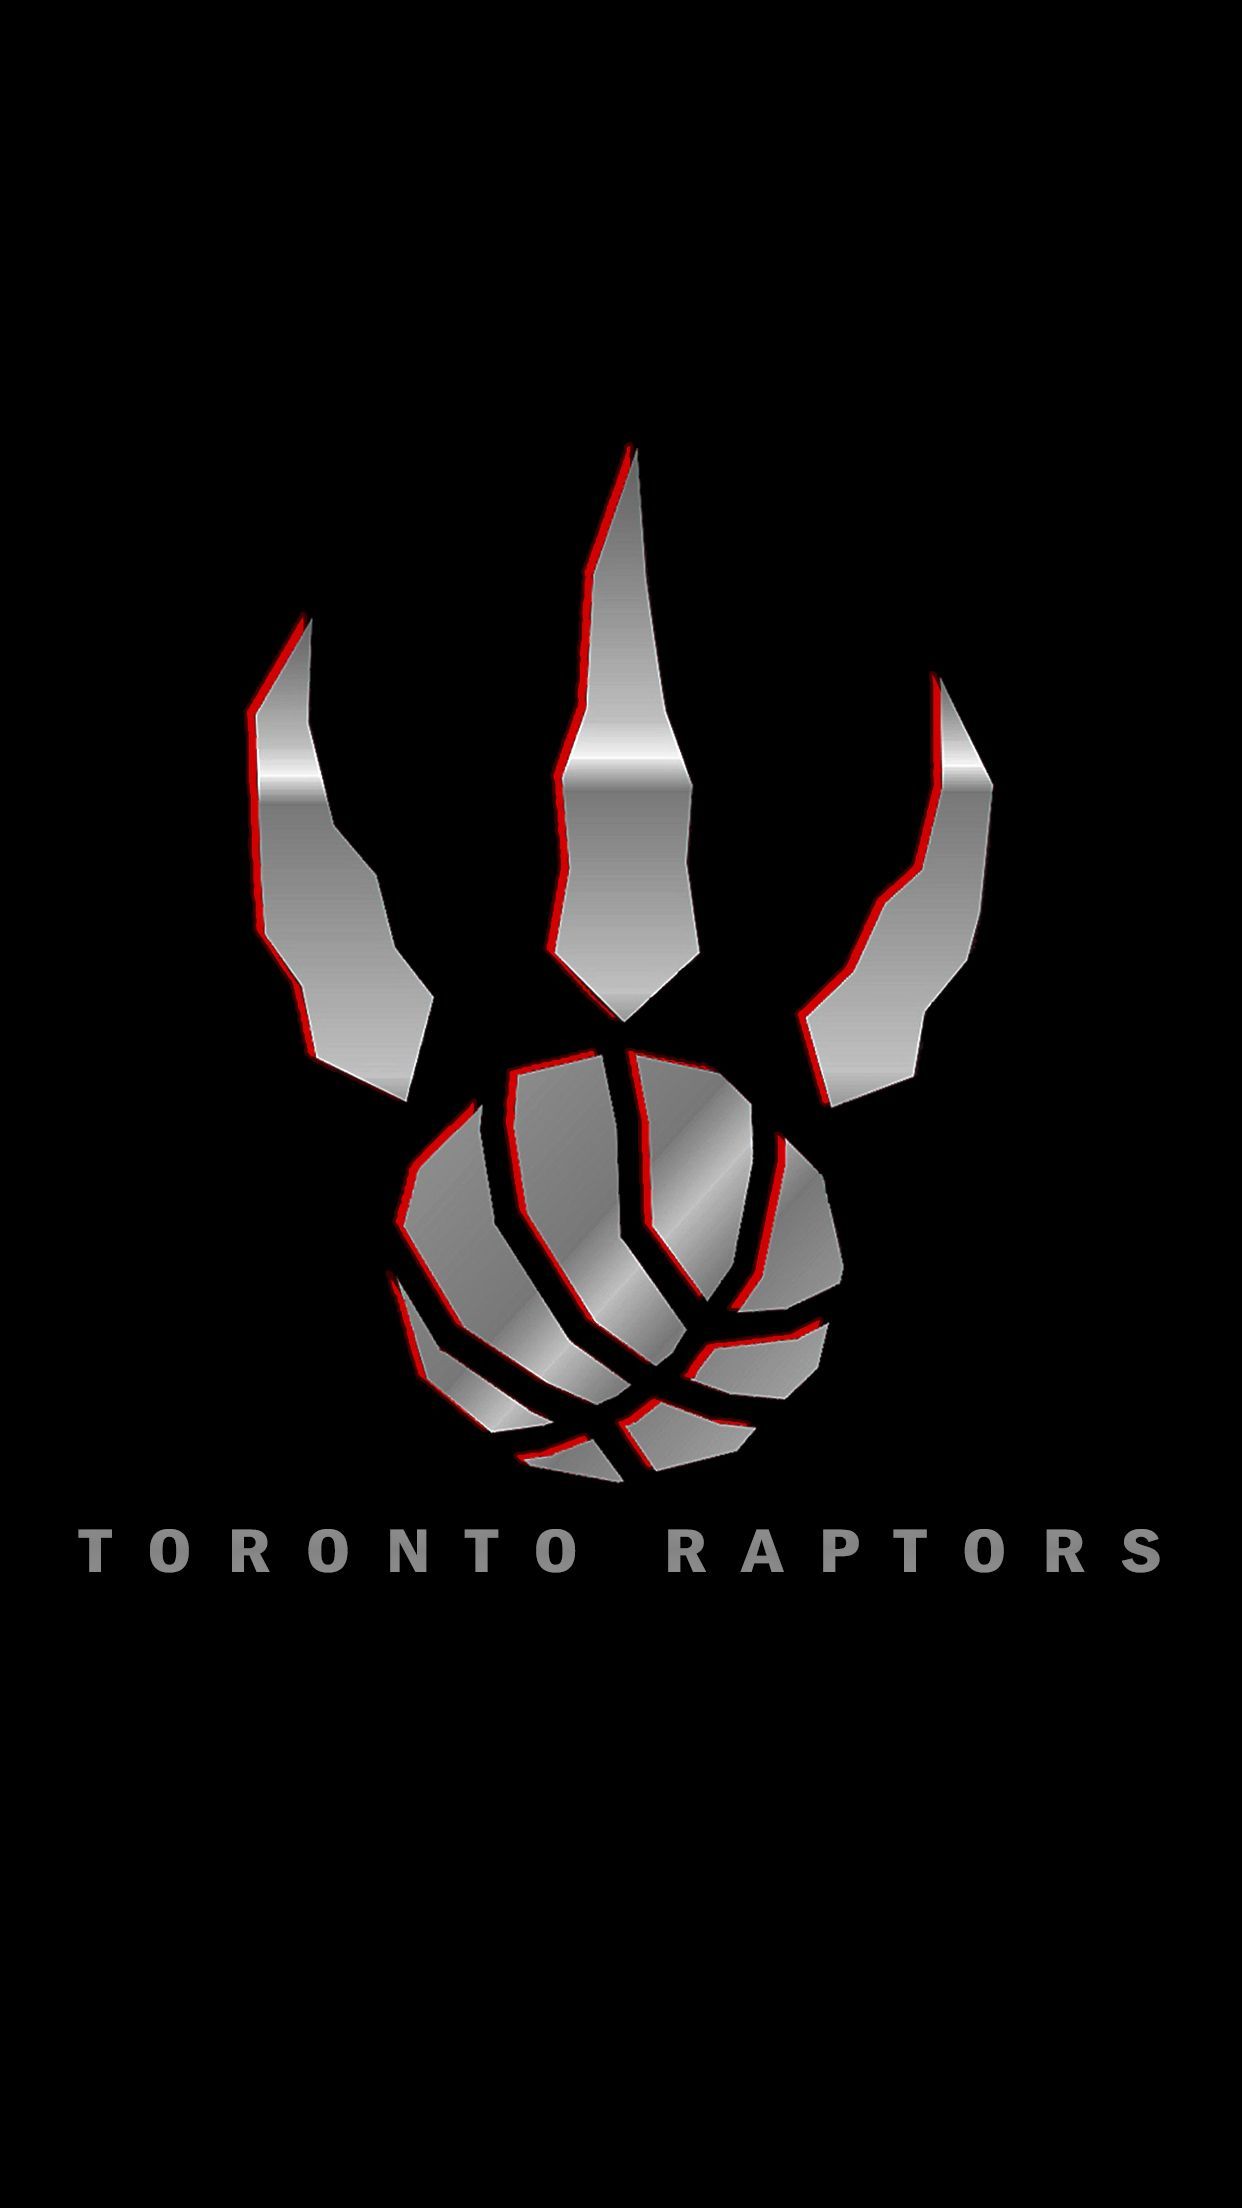 Toronto Raptors Wallpaper. Raptors basketball, Toronto raptors